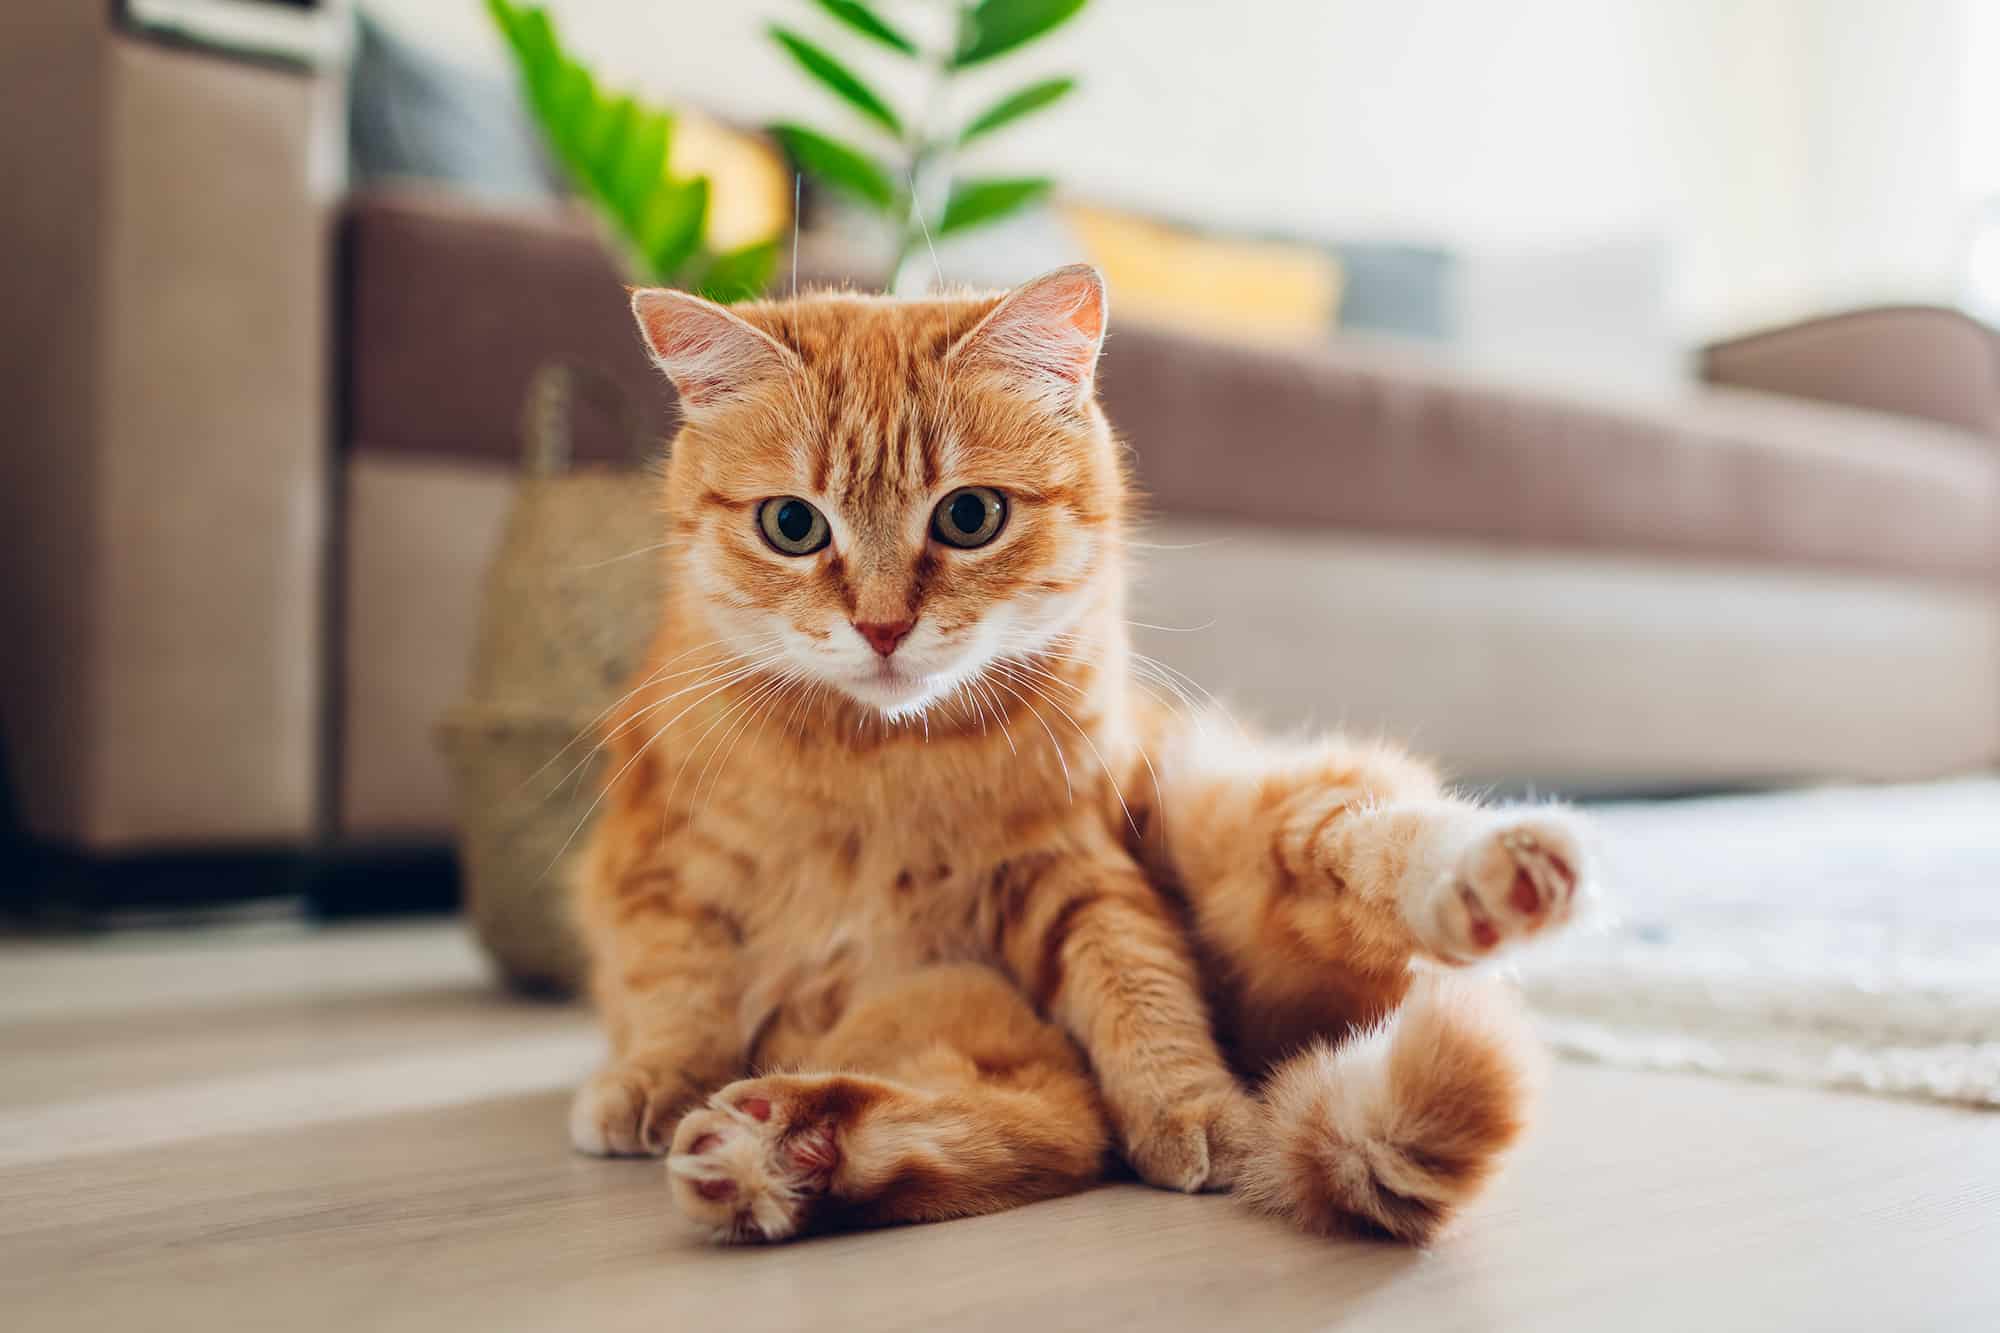 cat sitting on floor in living room